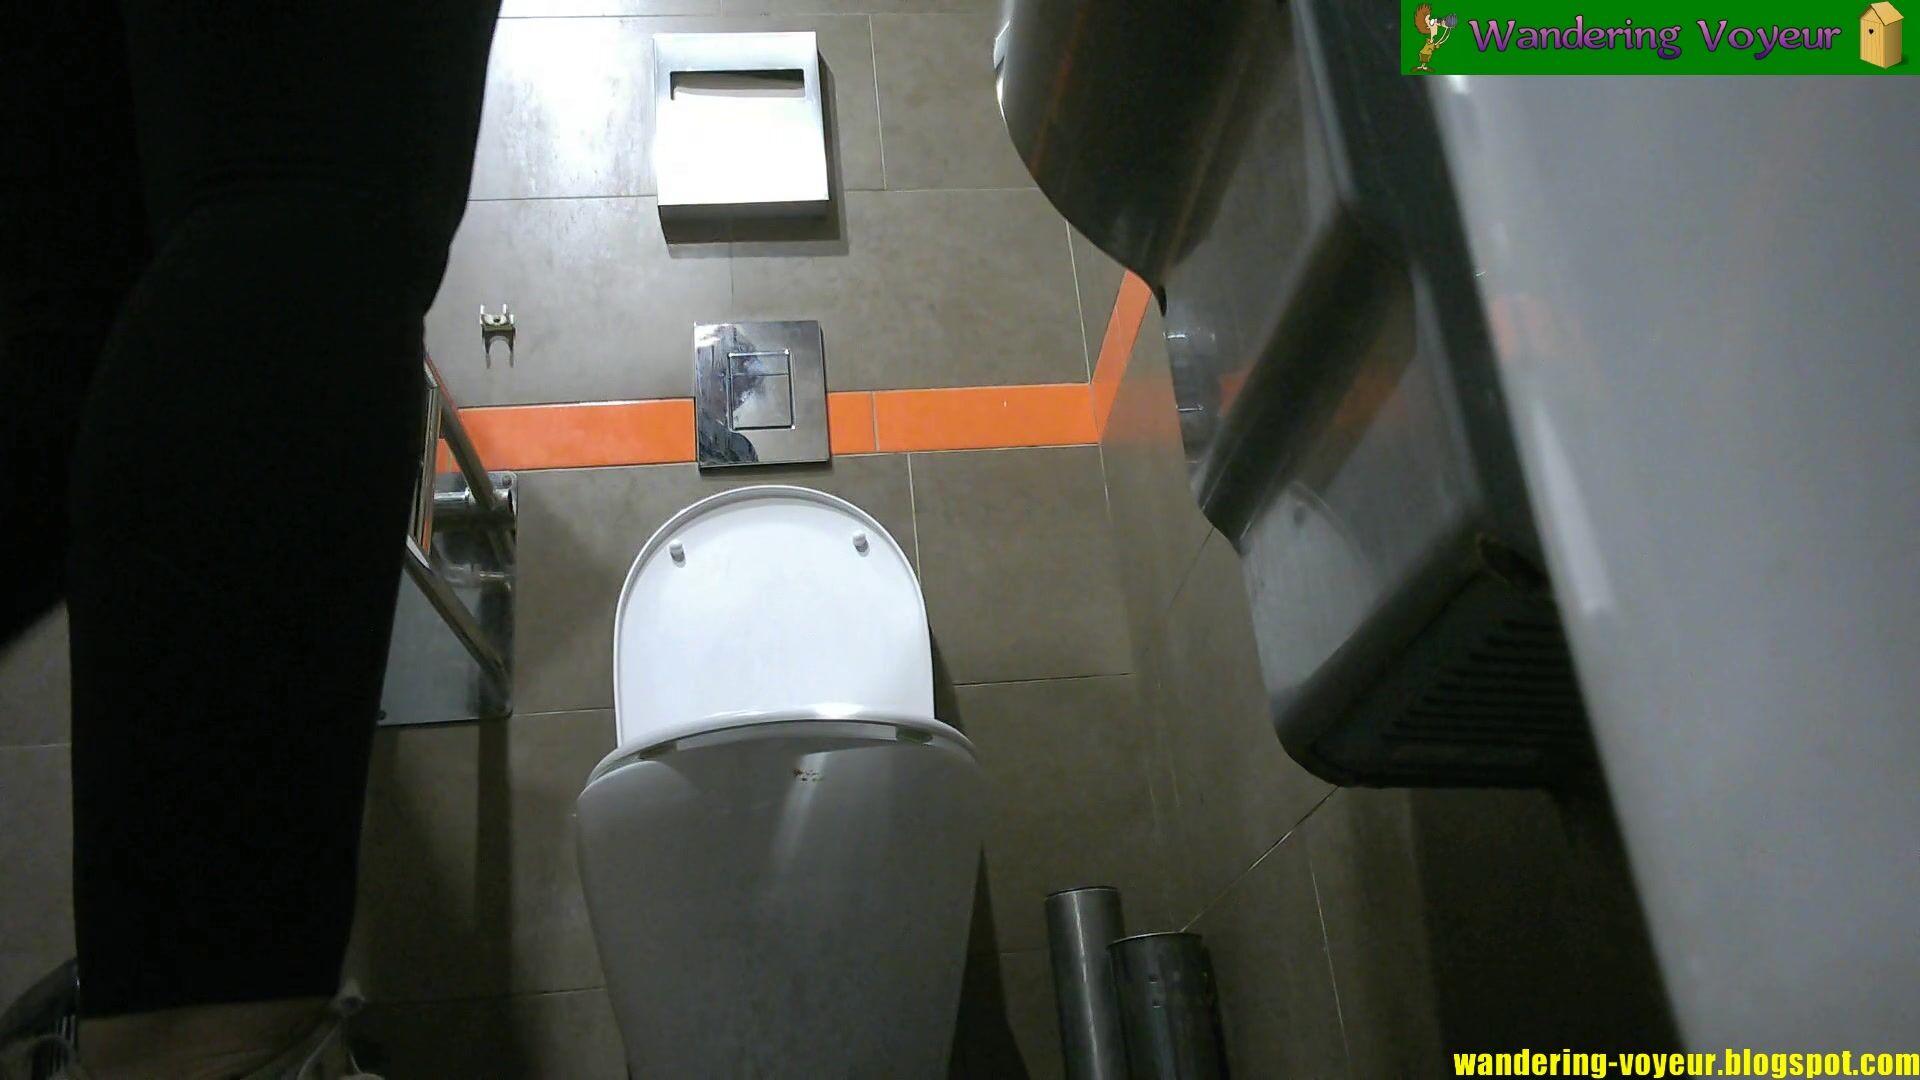 Set up spy camera in toilet